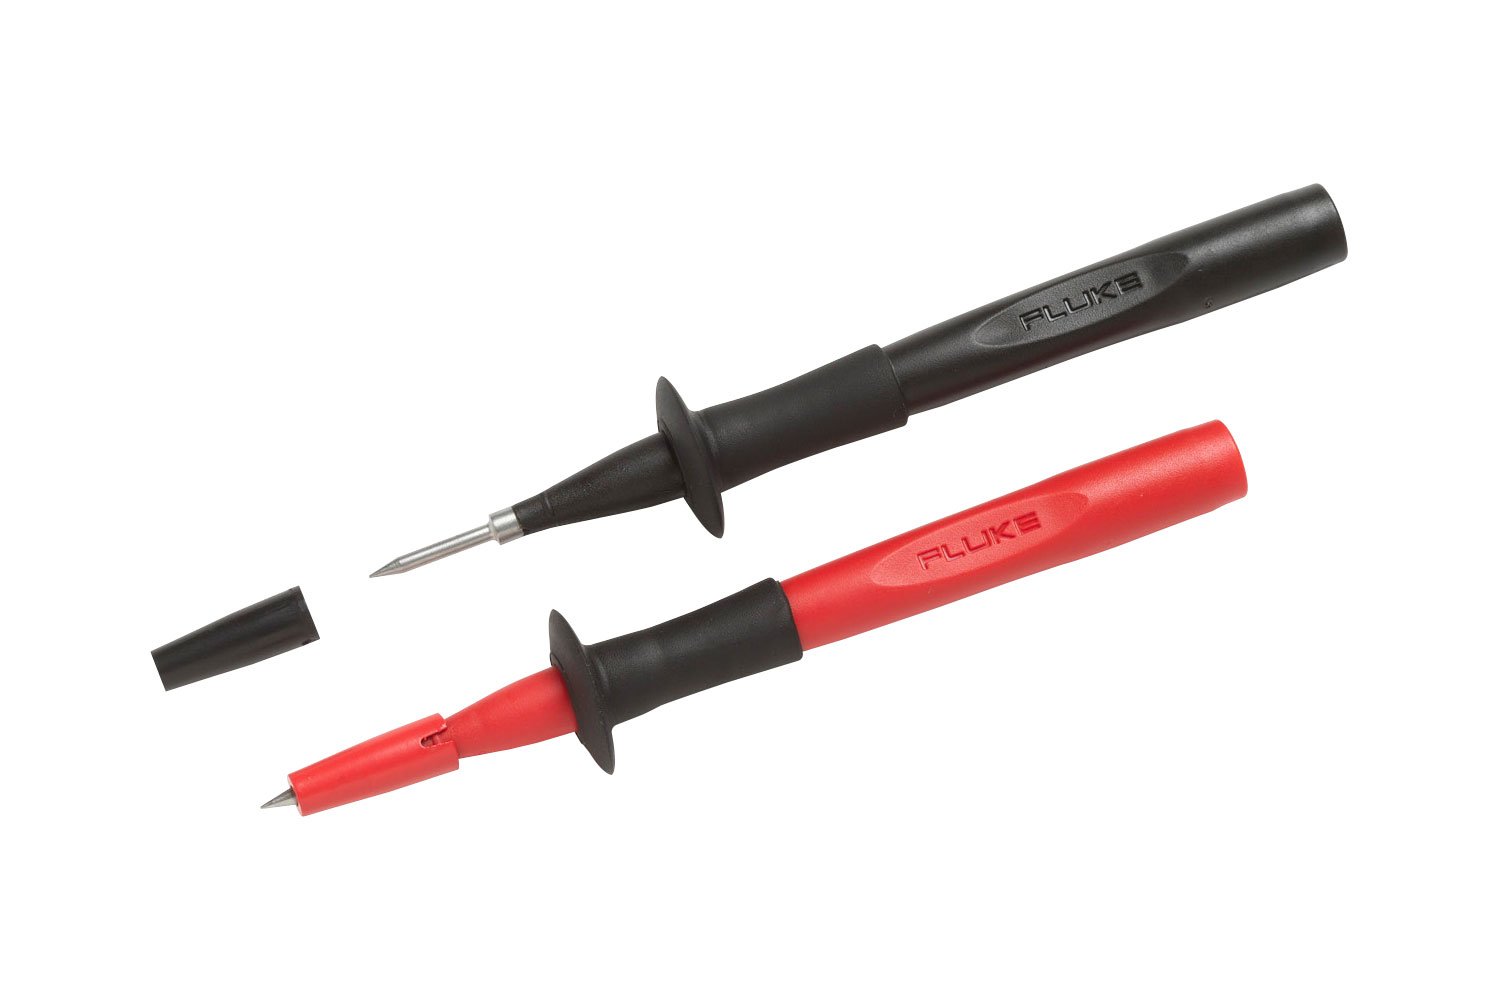 Fluke Tl220 SureGrip Industrial Test Lead Set Clips Pin Tip Padded Carry Case for sale online 